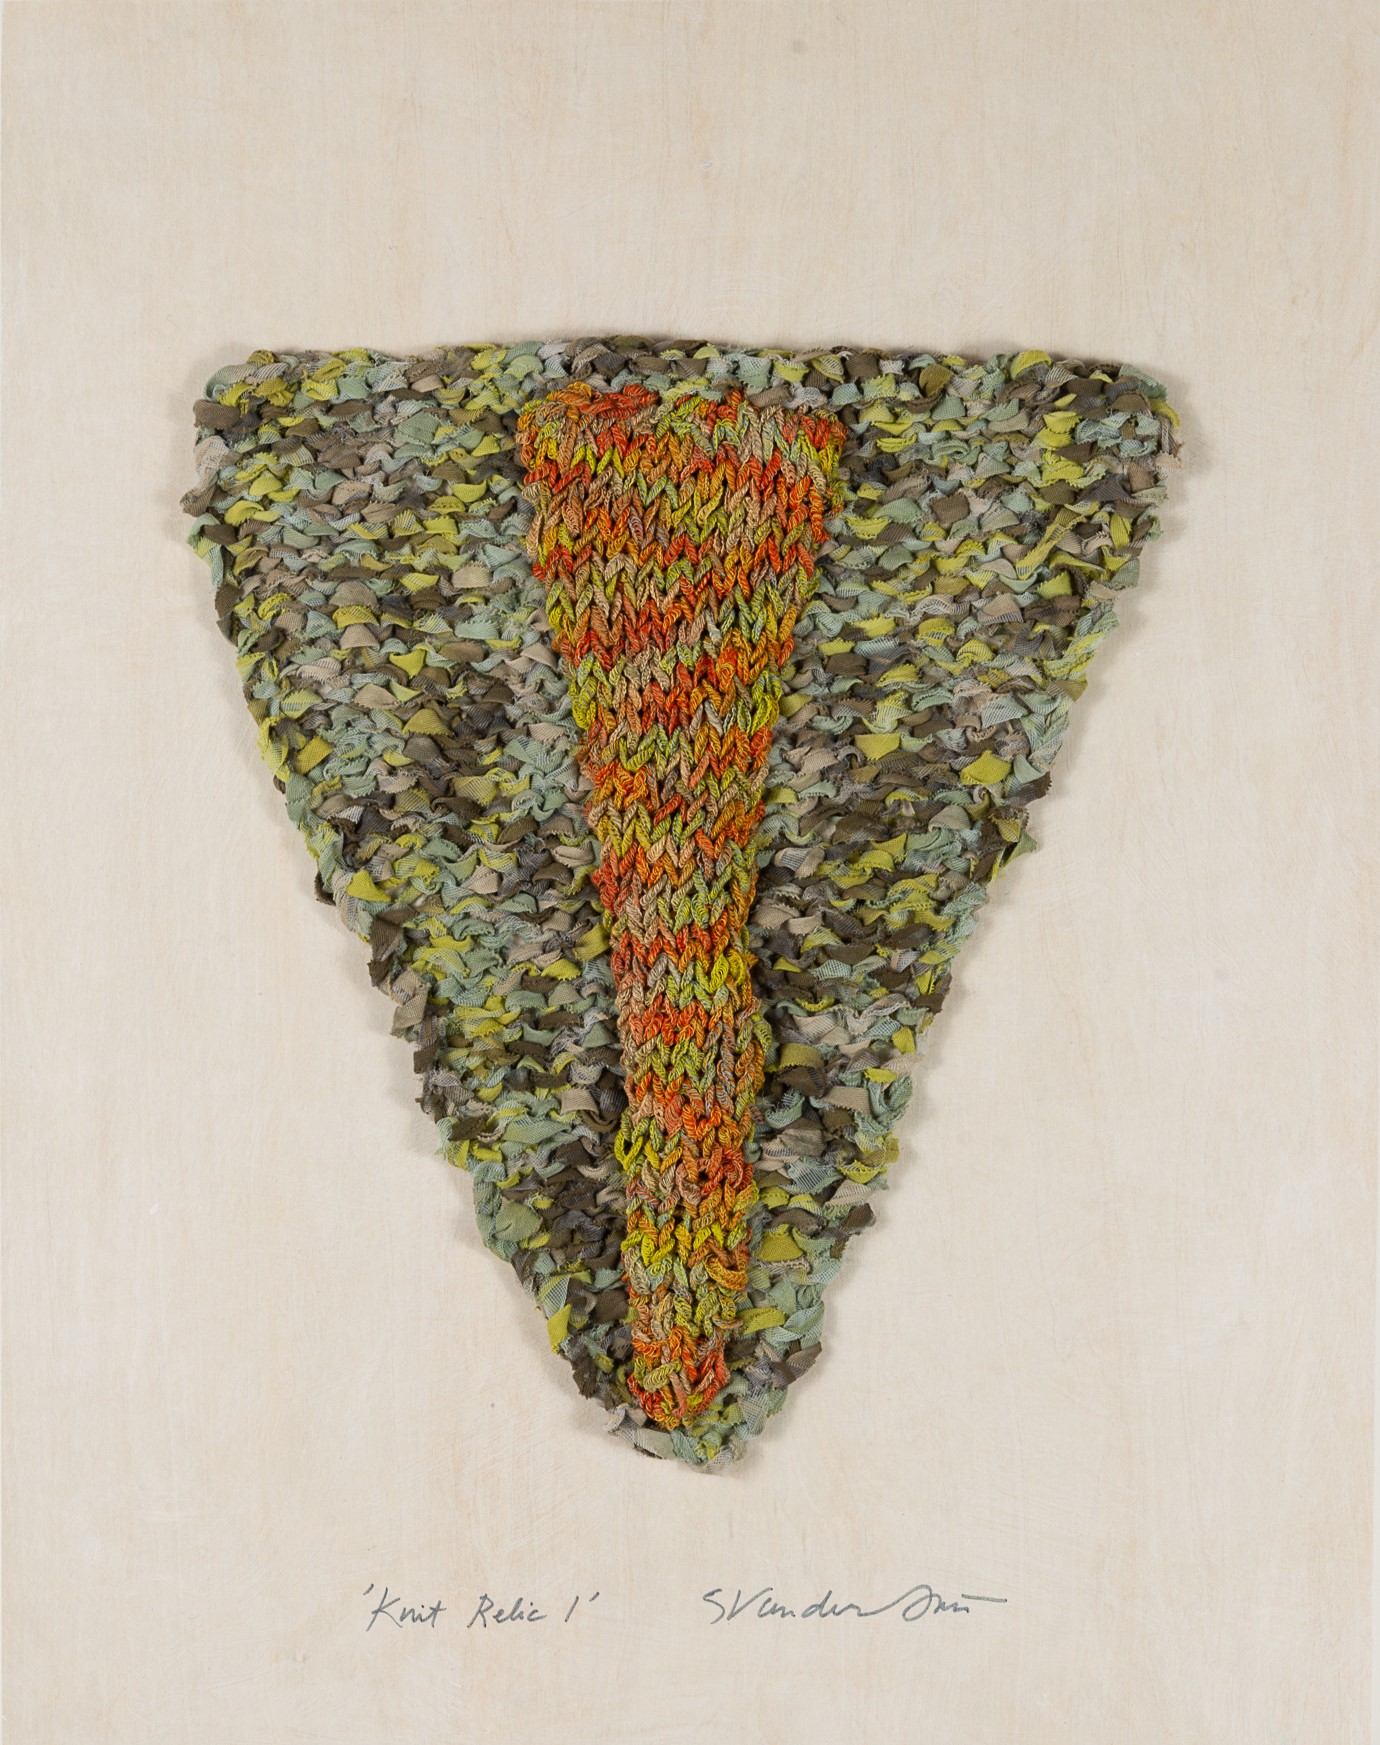  Sylvia Vander Sluis,  Knit Relic 1 (Green/Orange) , Handknit cotton/polyester, ribbon yarn, 18x14x1.5 